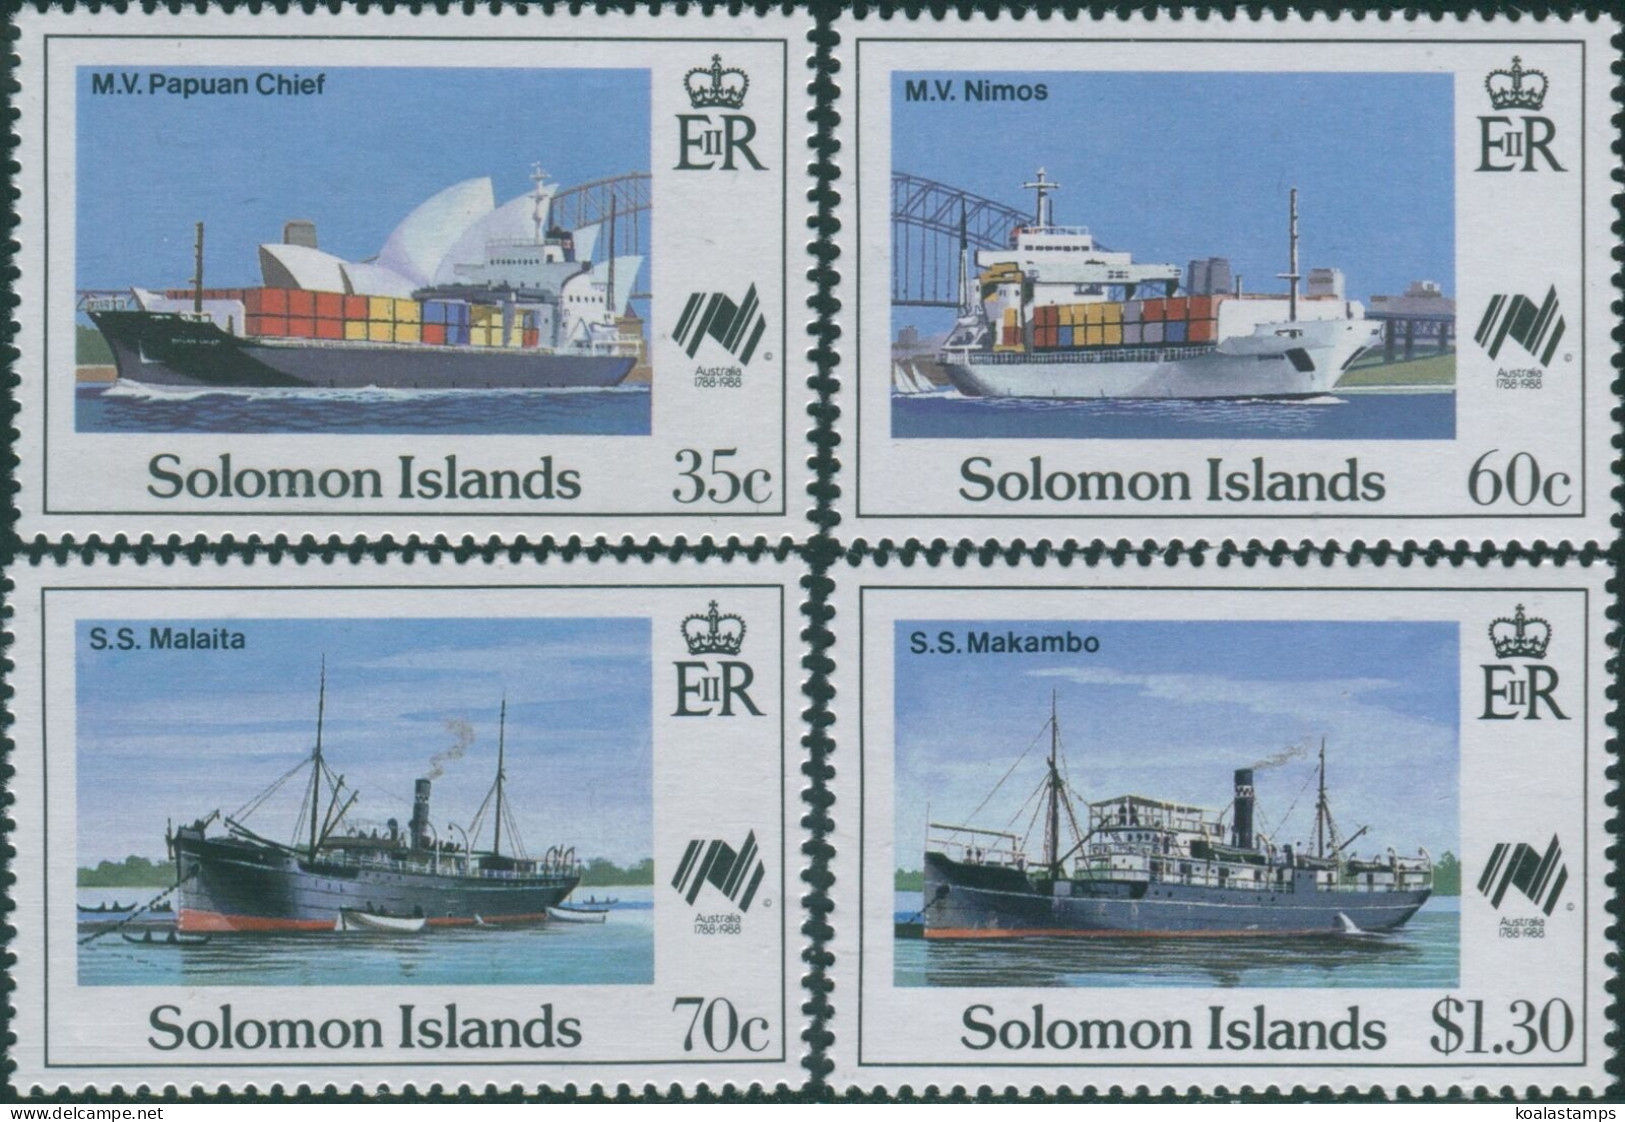 Solomon Islands 1988 SG626-629 Sydpex Stamp Exhibition Set MNH - Solomon Islands (1978-...)